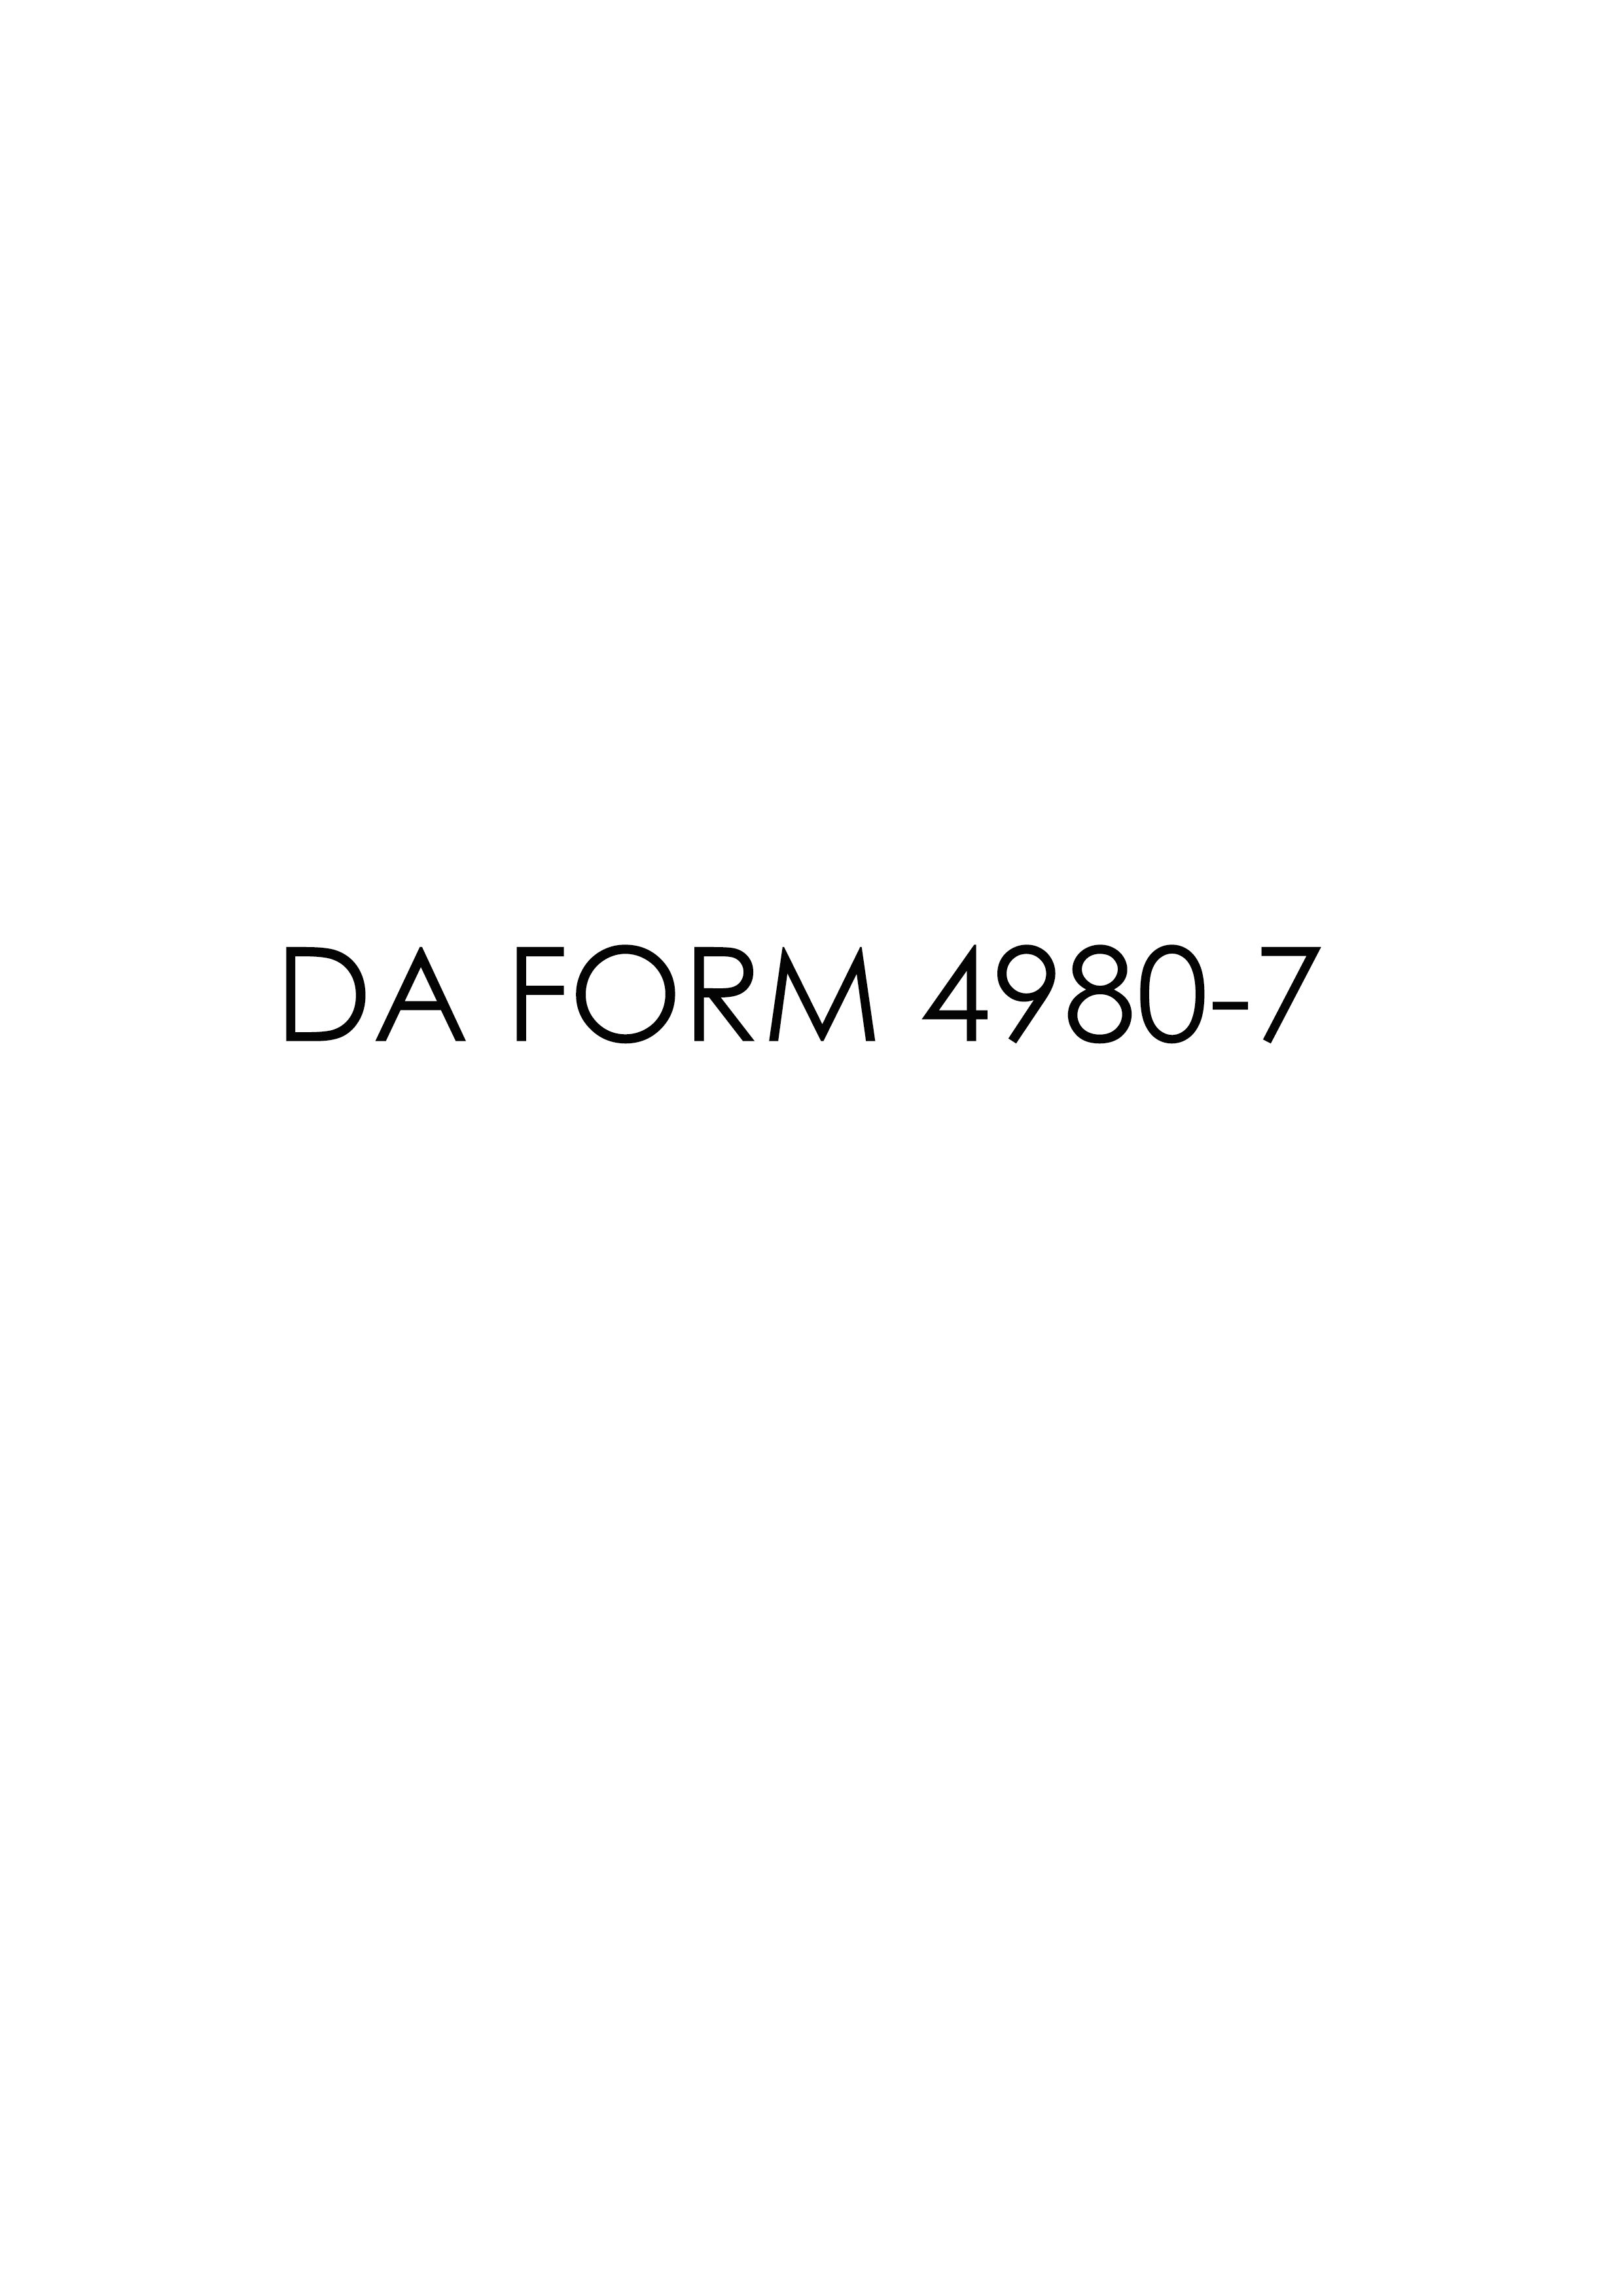 da Form 4980-7 fillable